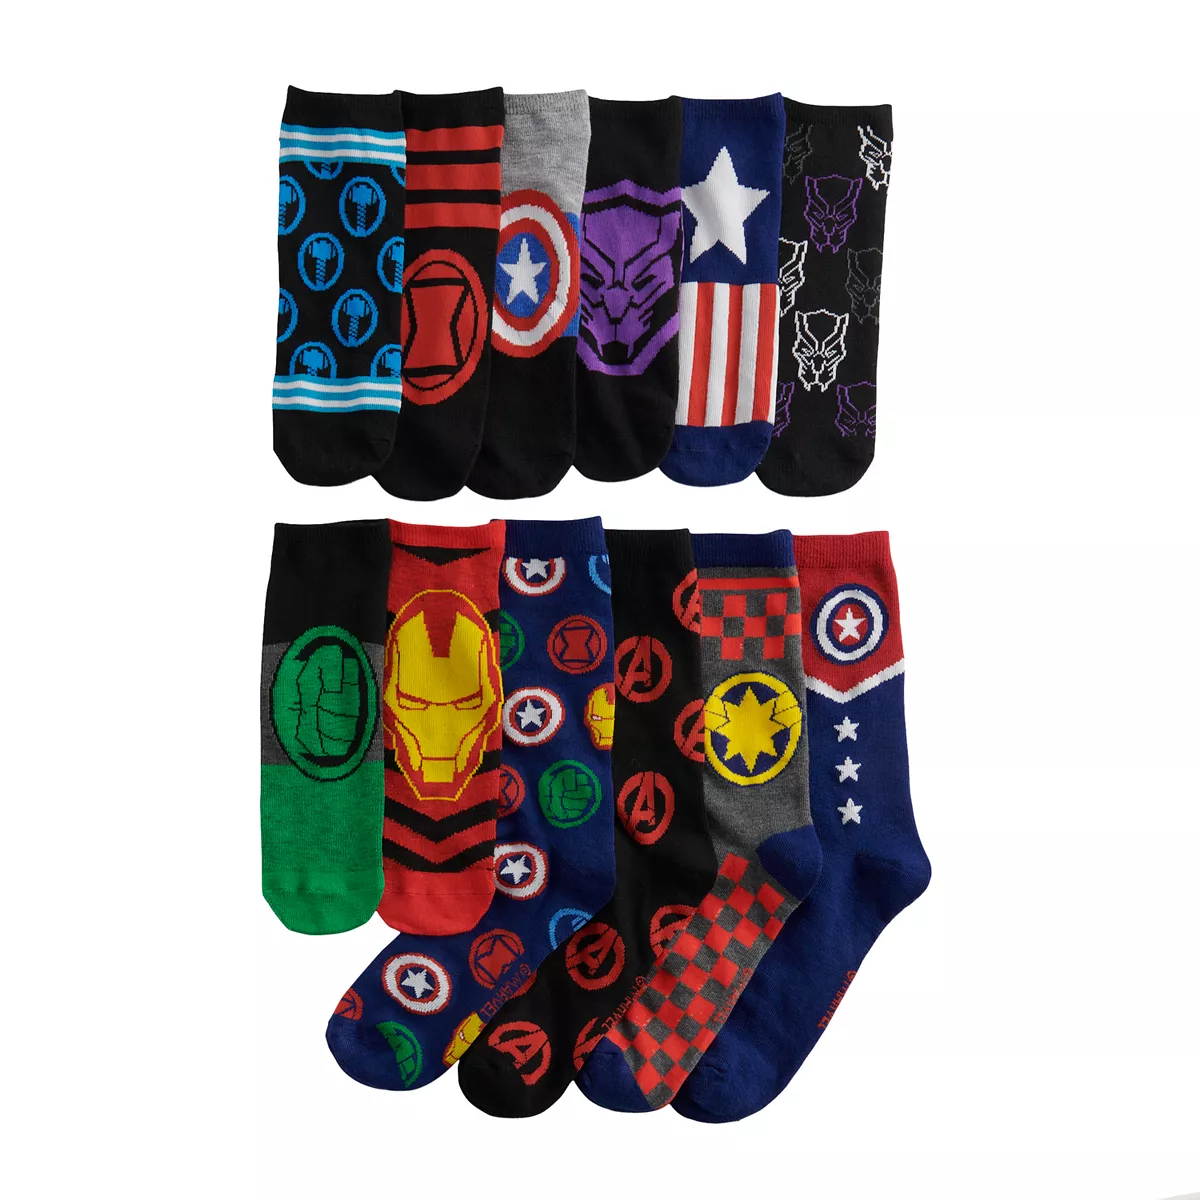 New 2020 Marvel Socks Advent Calendars Available Now! {Men